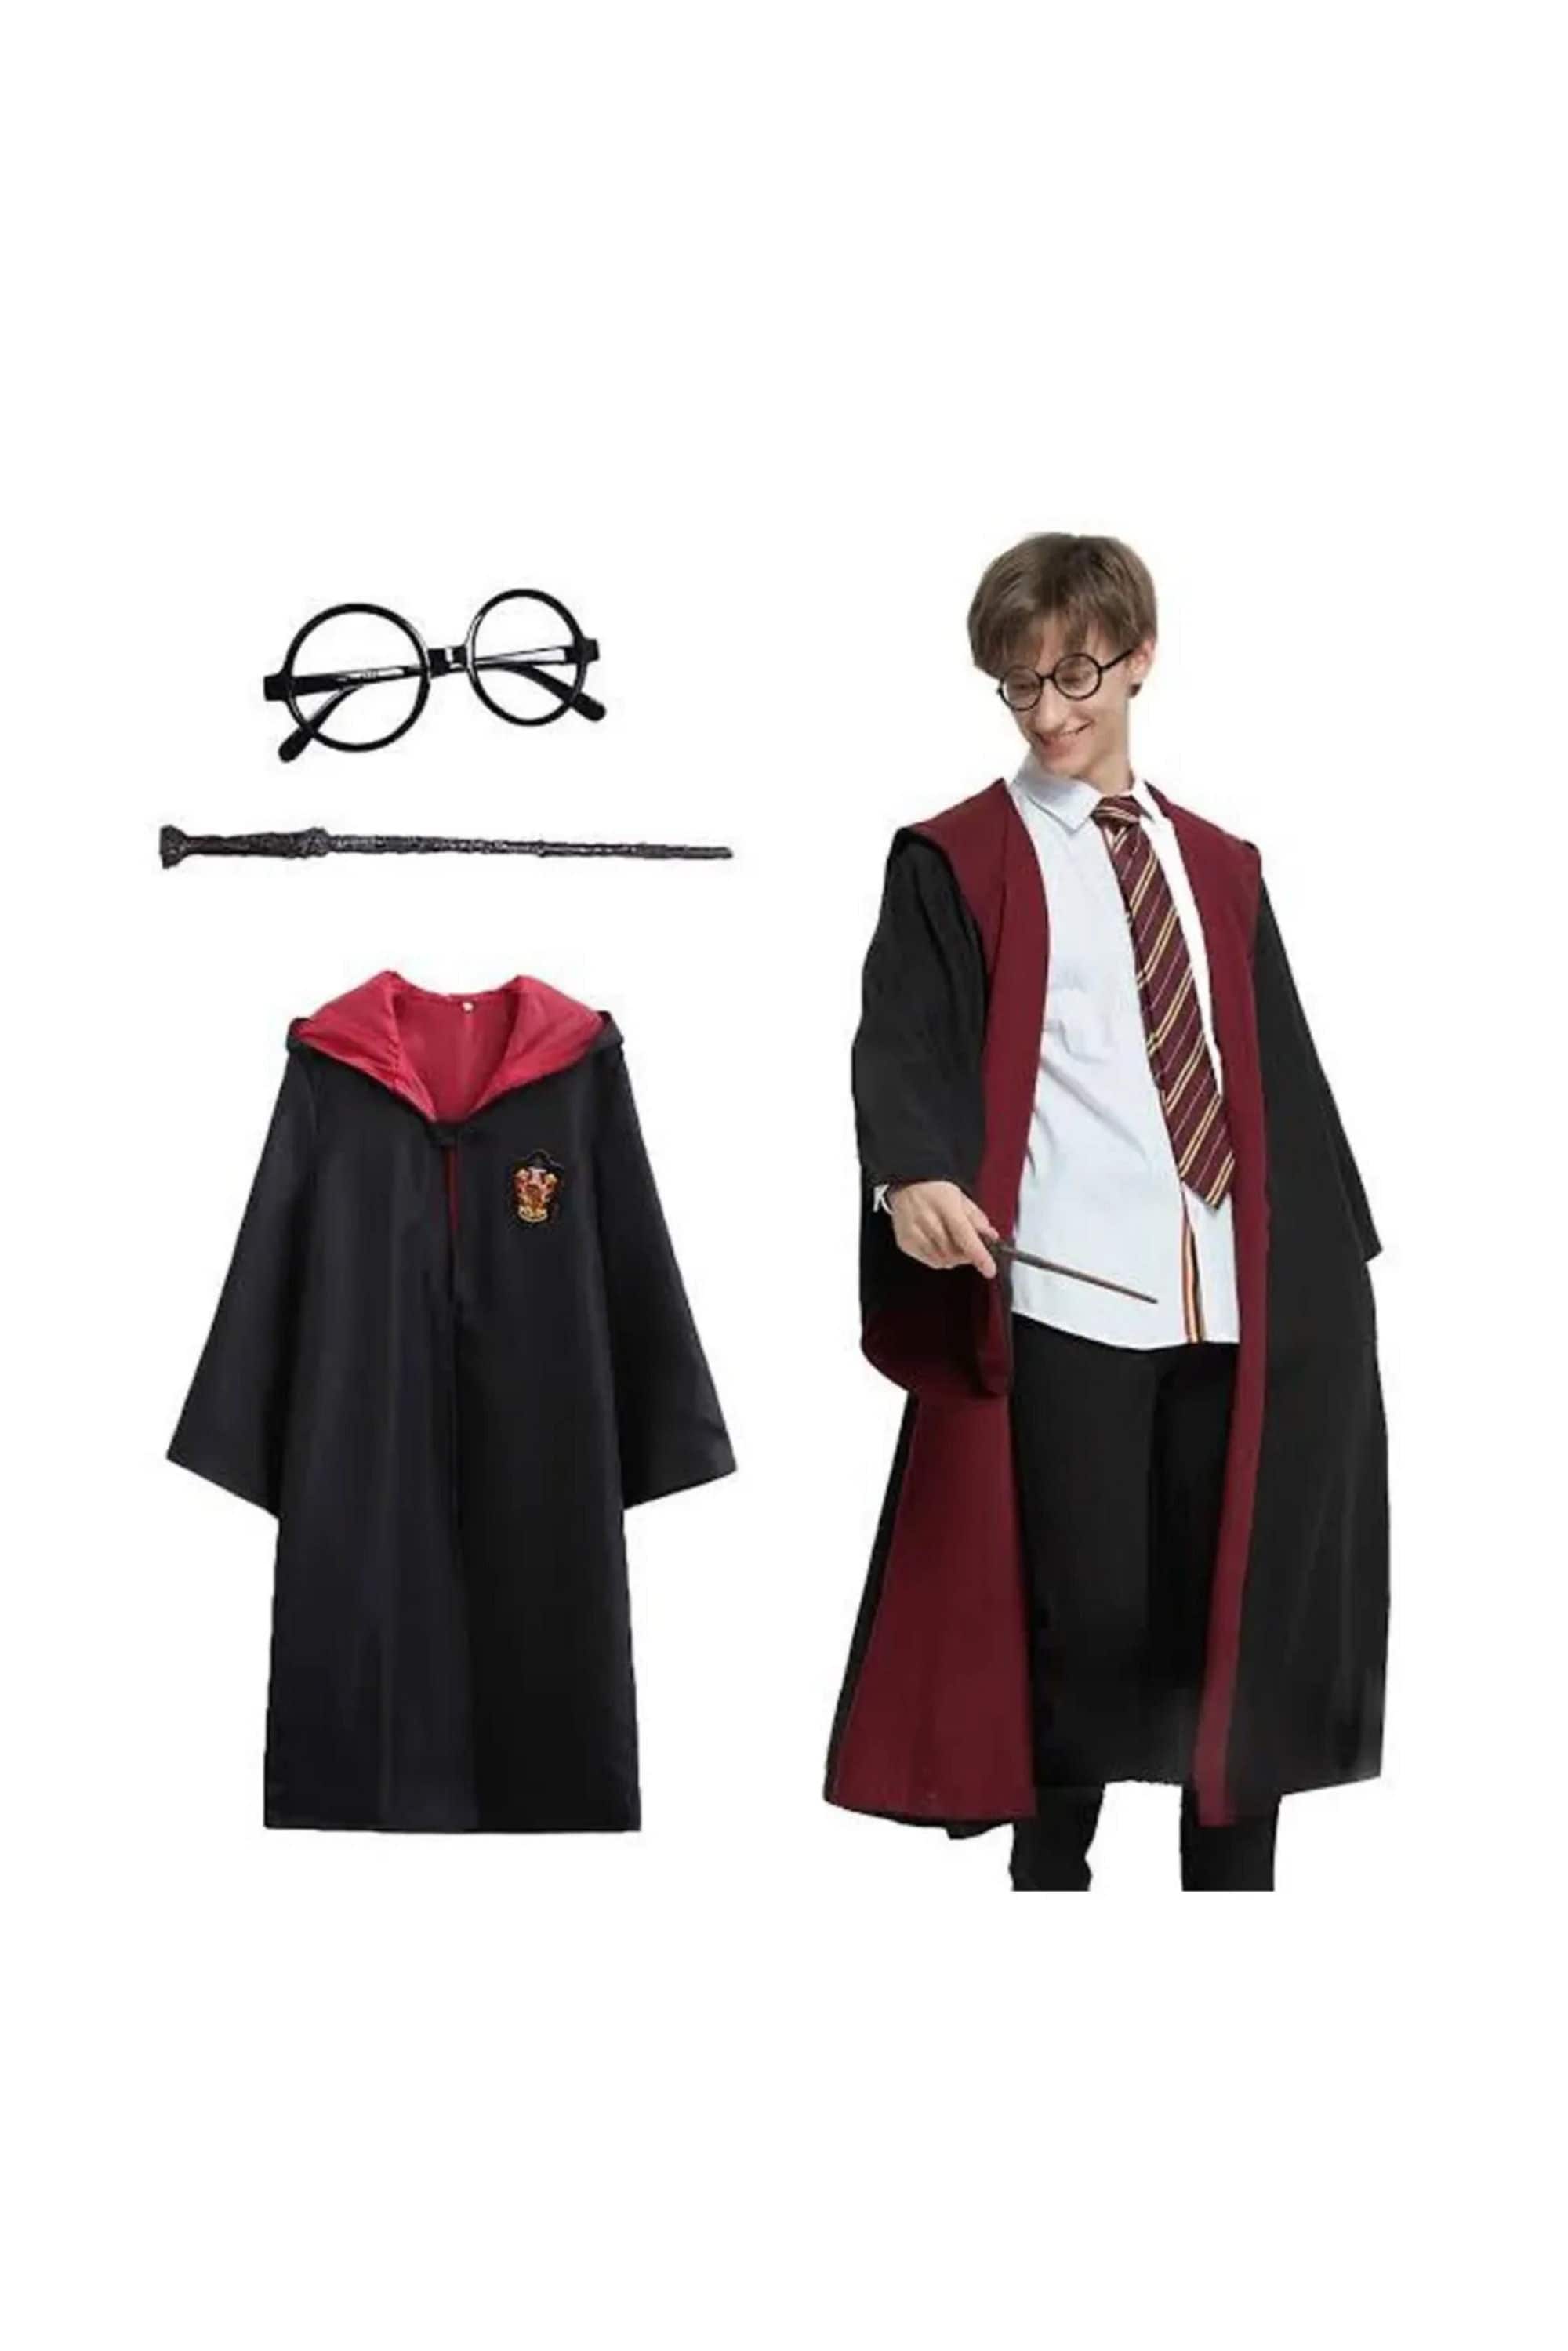 Harry potter cape adults 